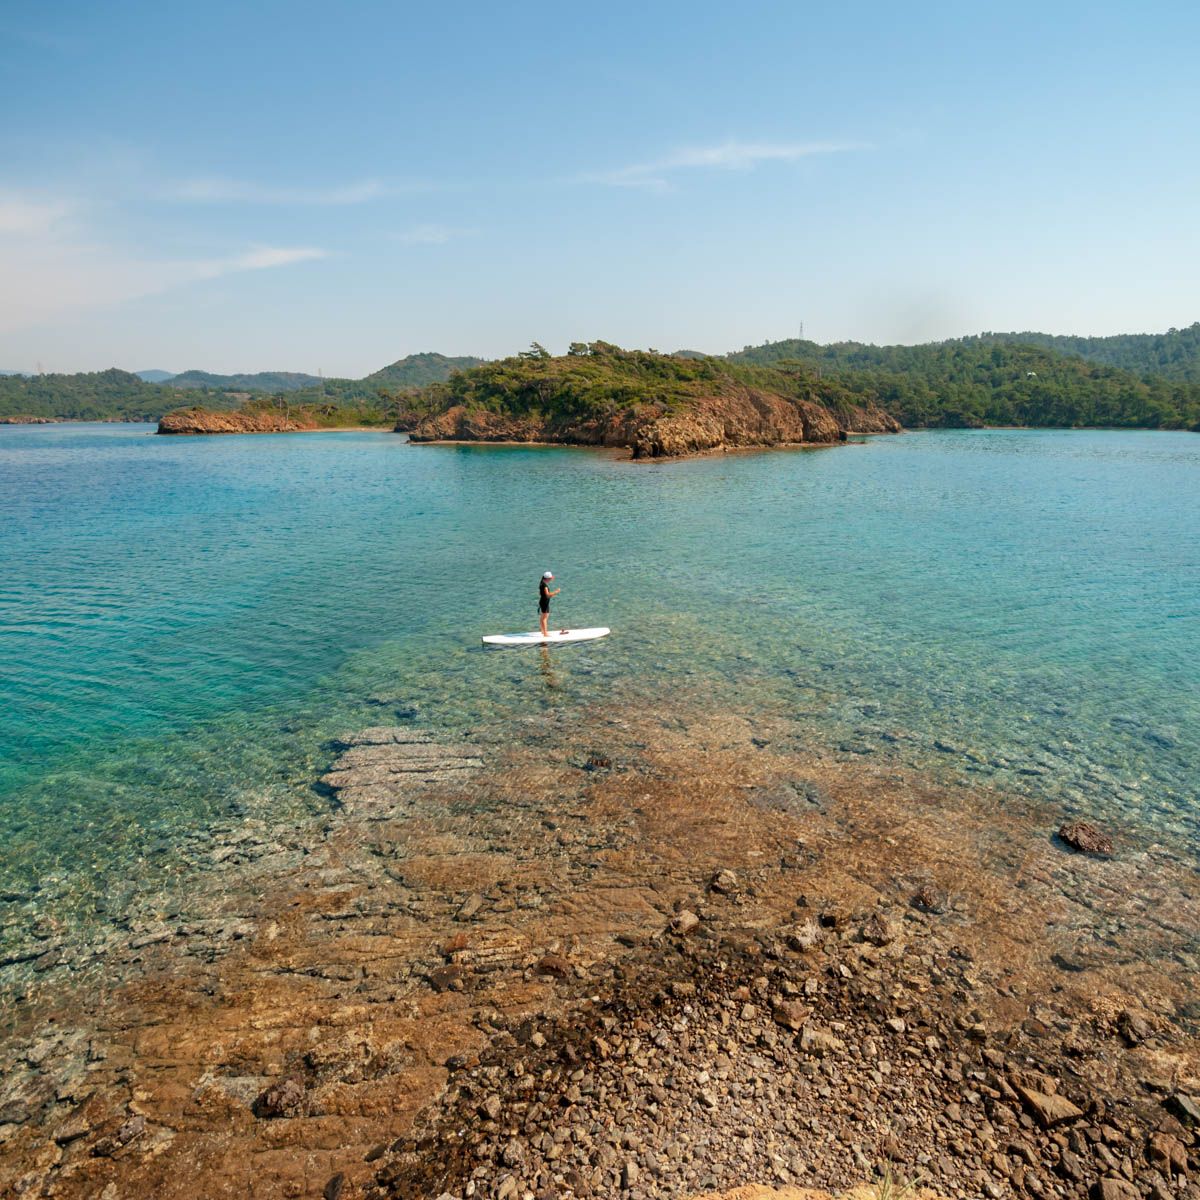 Paddleboardder exploring the shores of Balikasiran